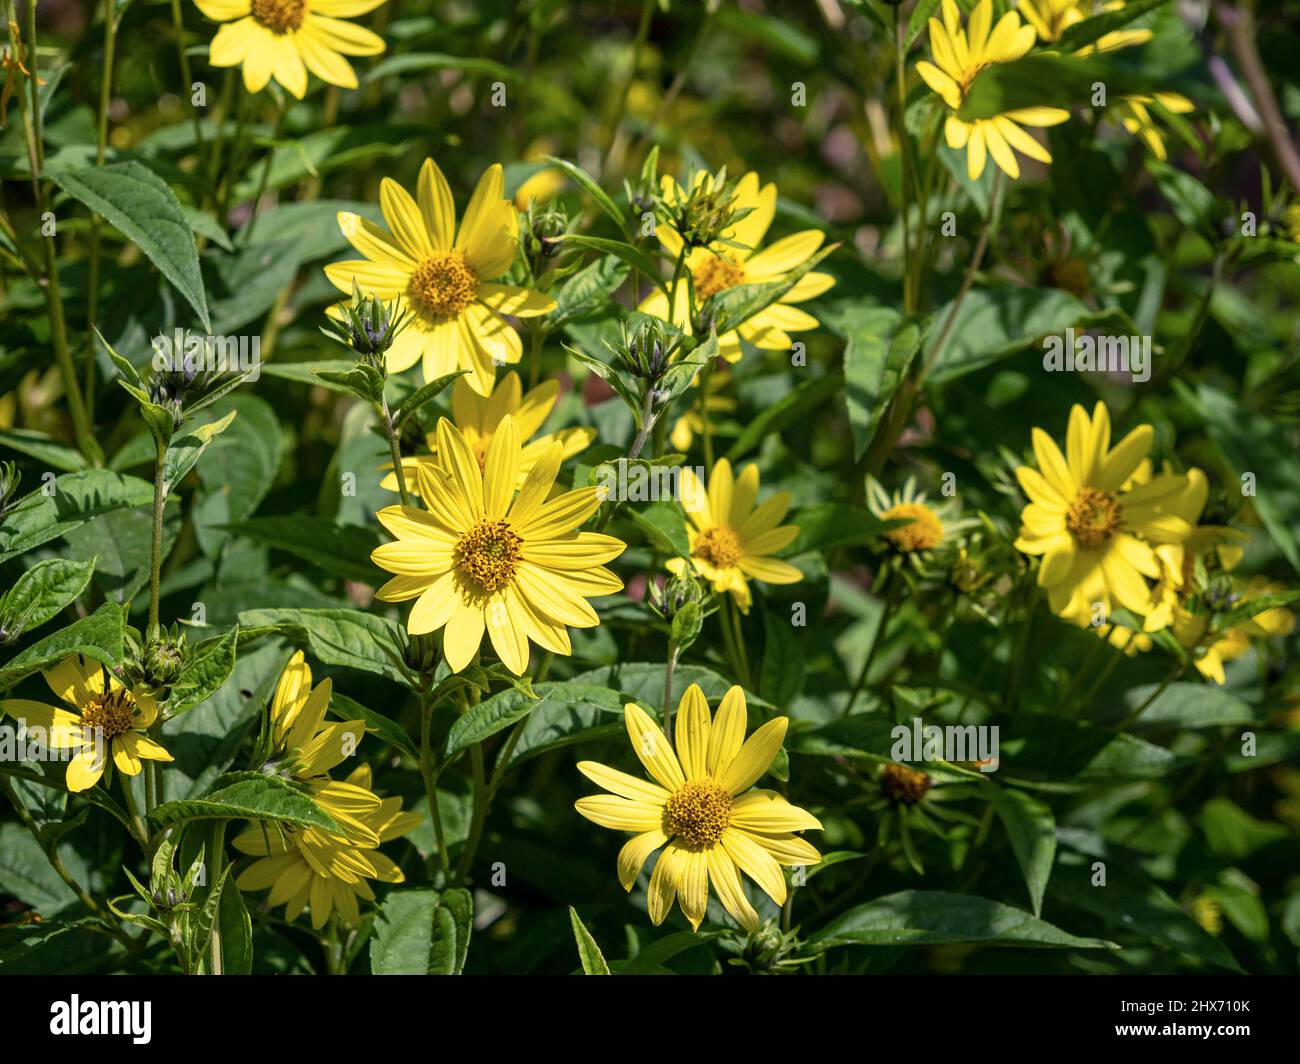 Narrowleaf sunflowers Helianthus angustifolius in a garden Stock Photo